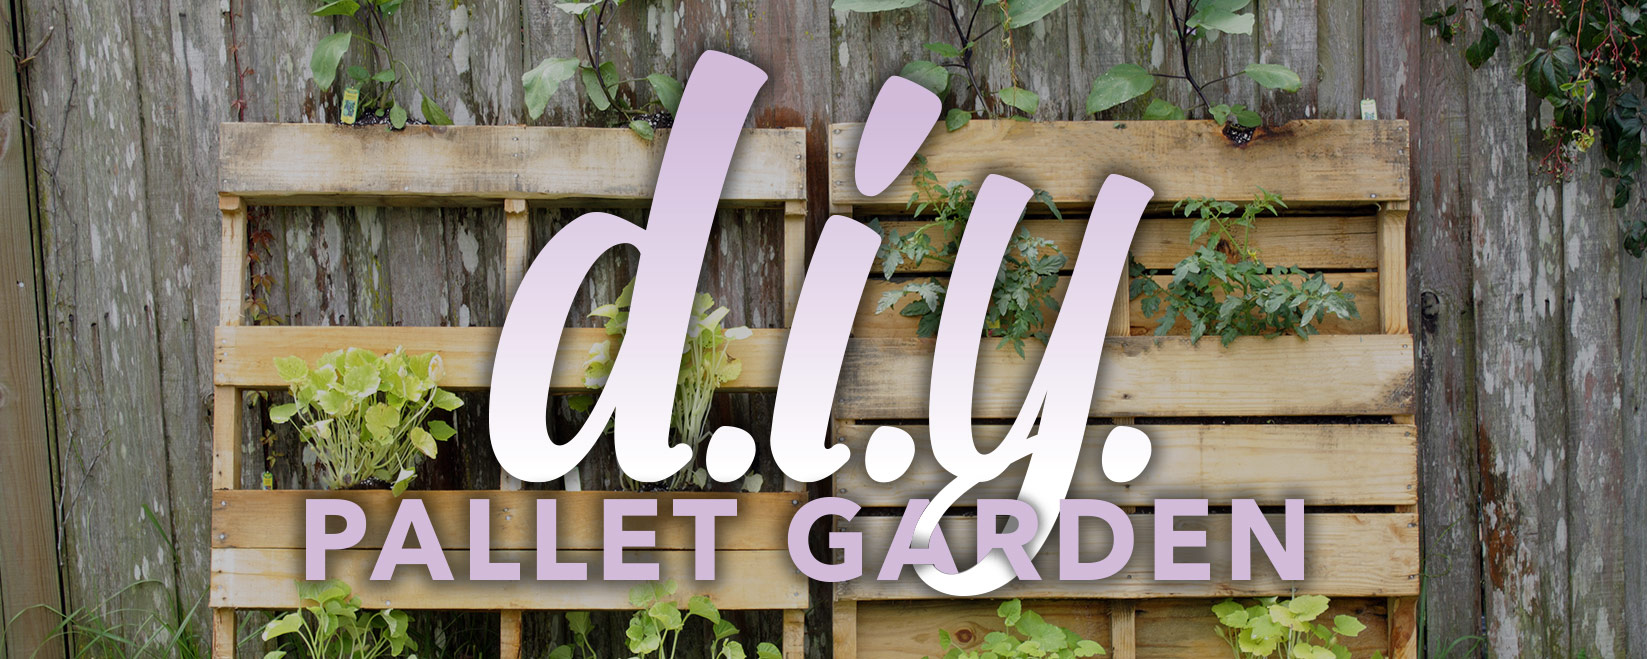 DIY Pallet Herb Garden Instructions